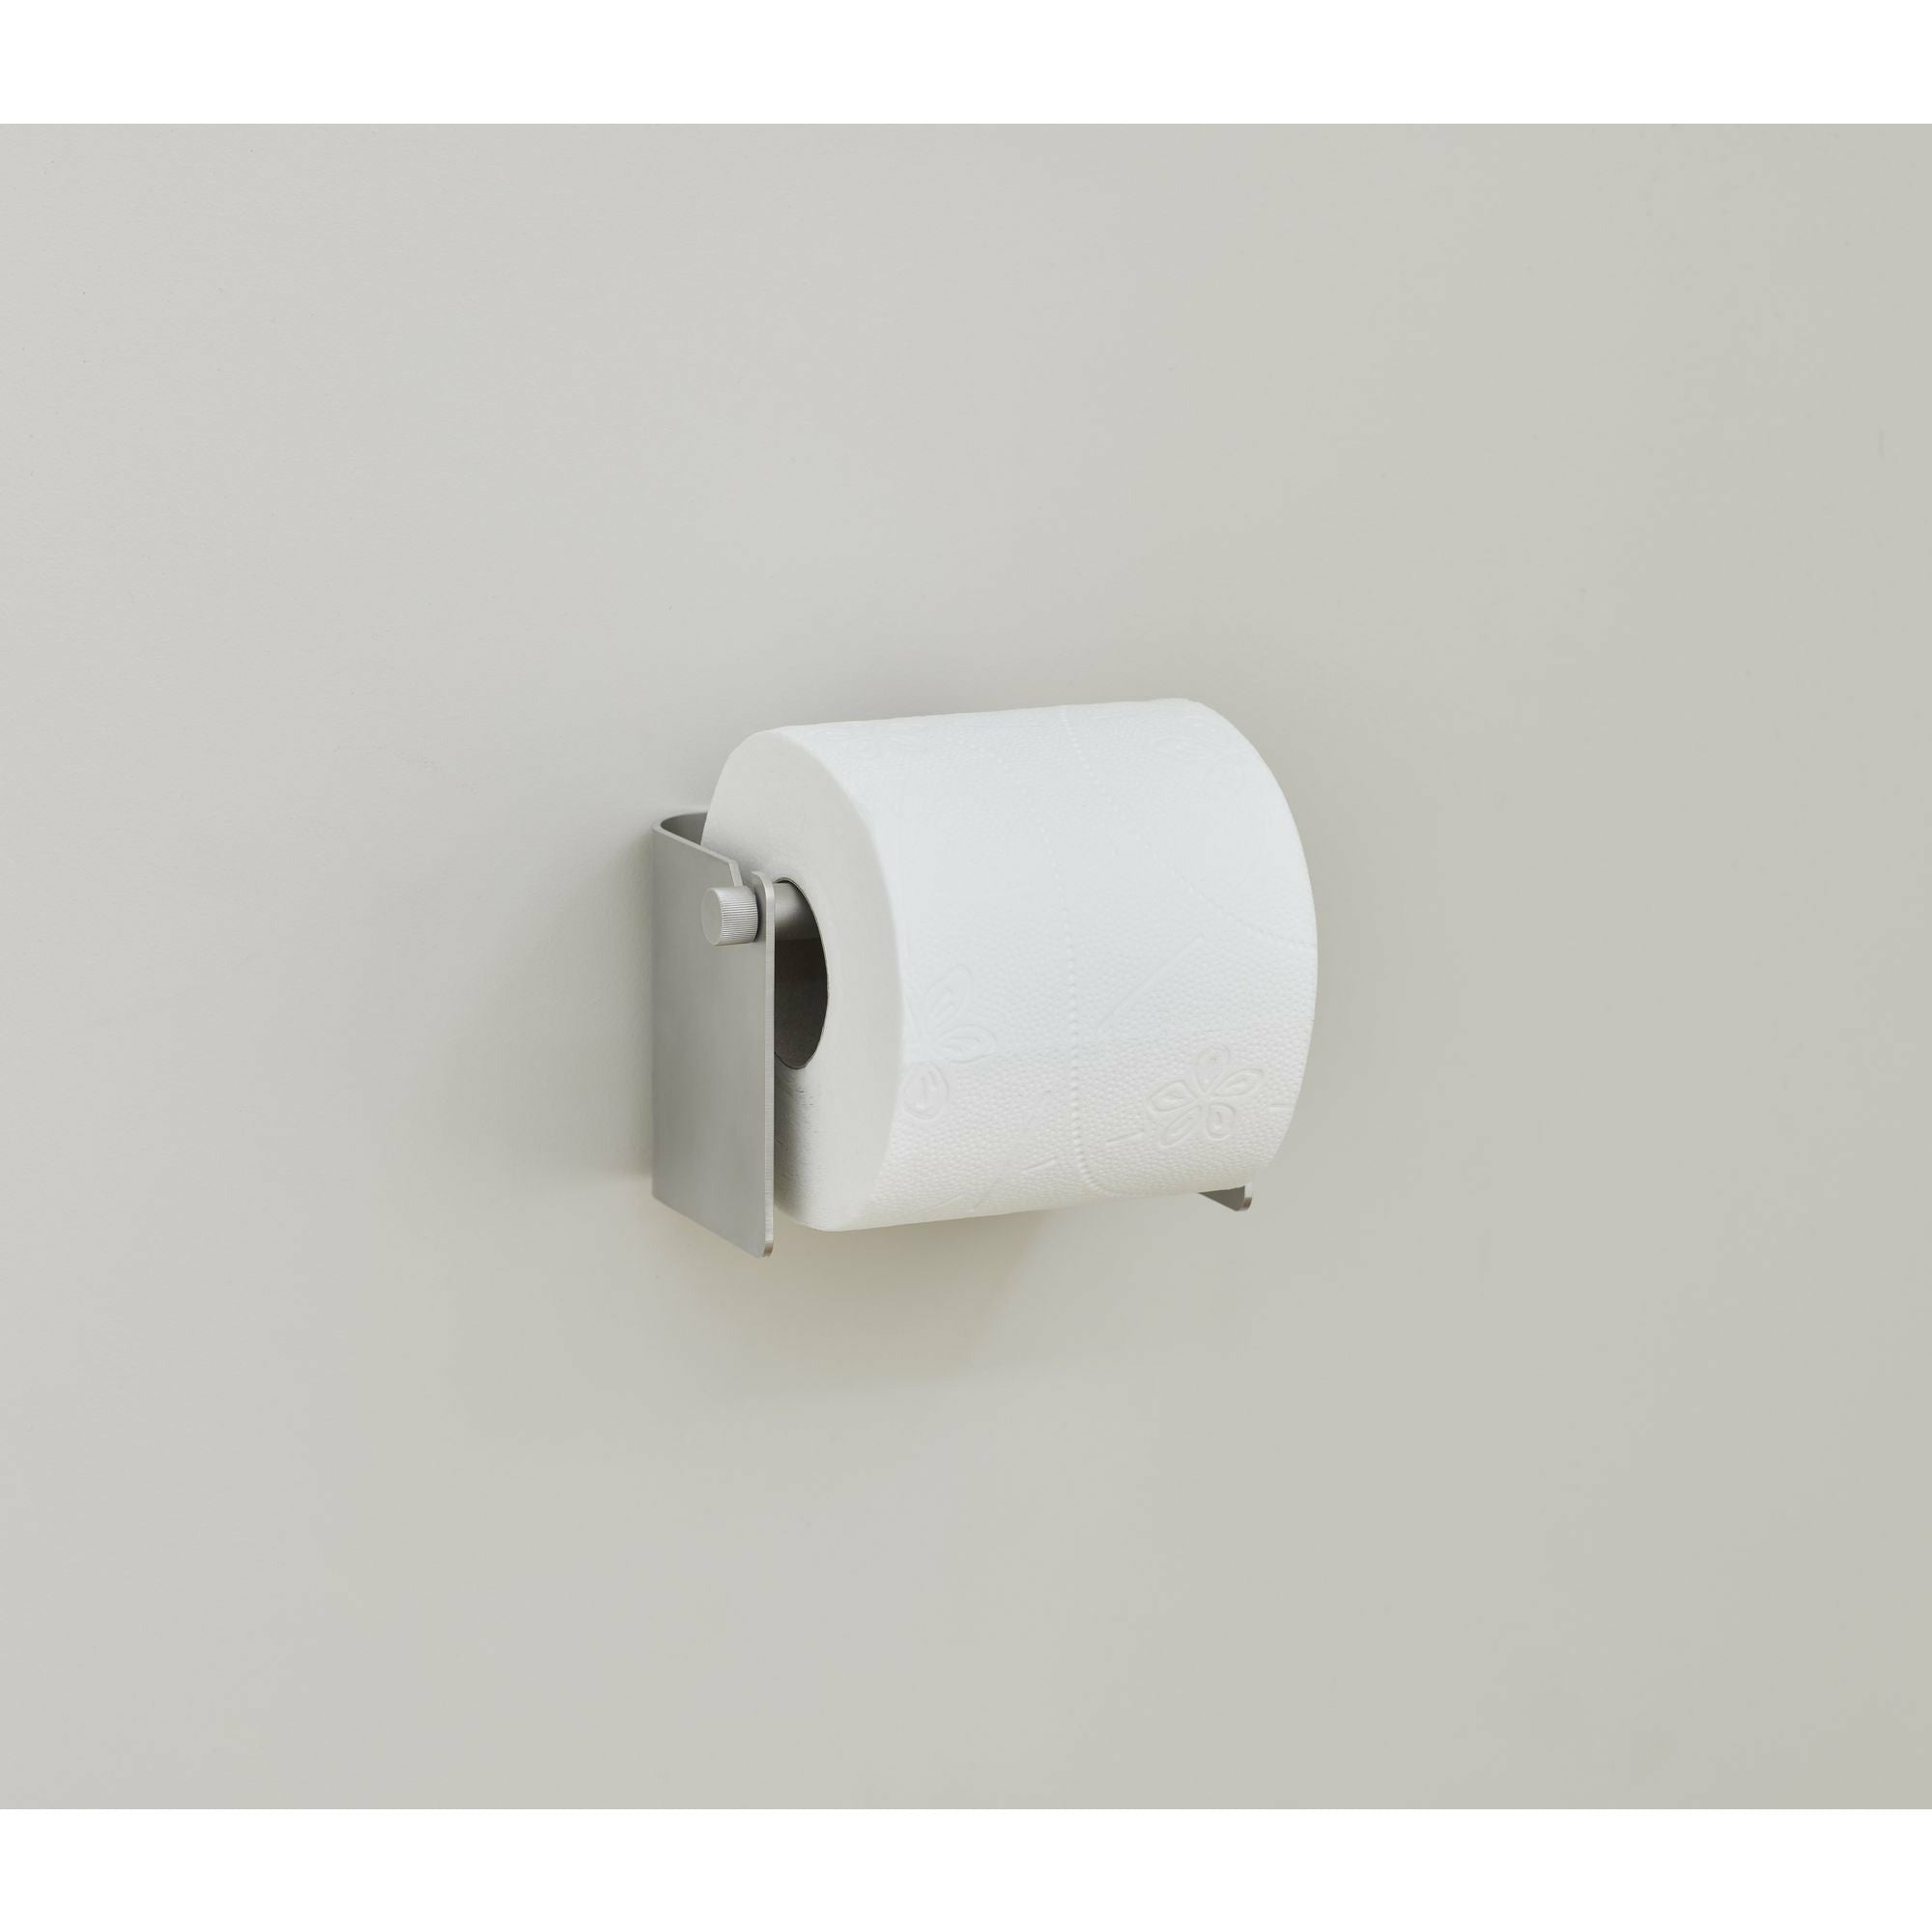 Form & Refine Arc Toilet Roll Holder. Steel